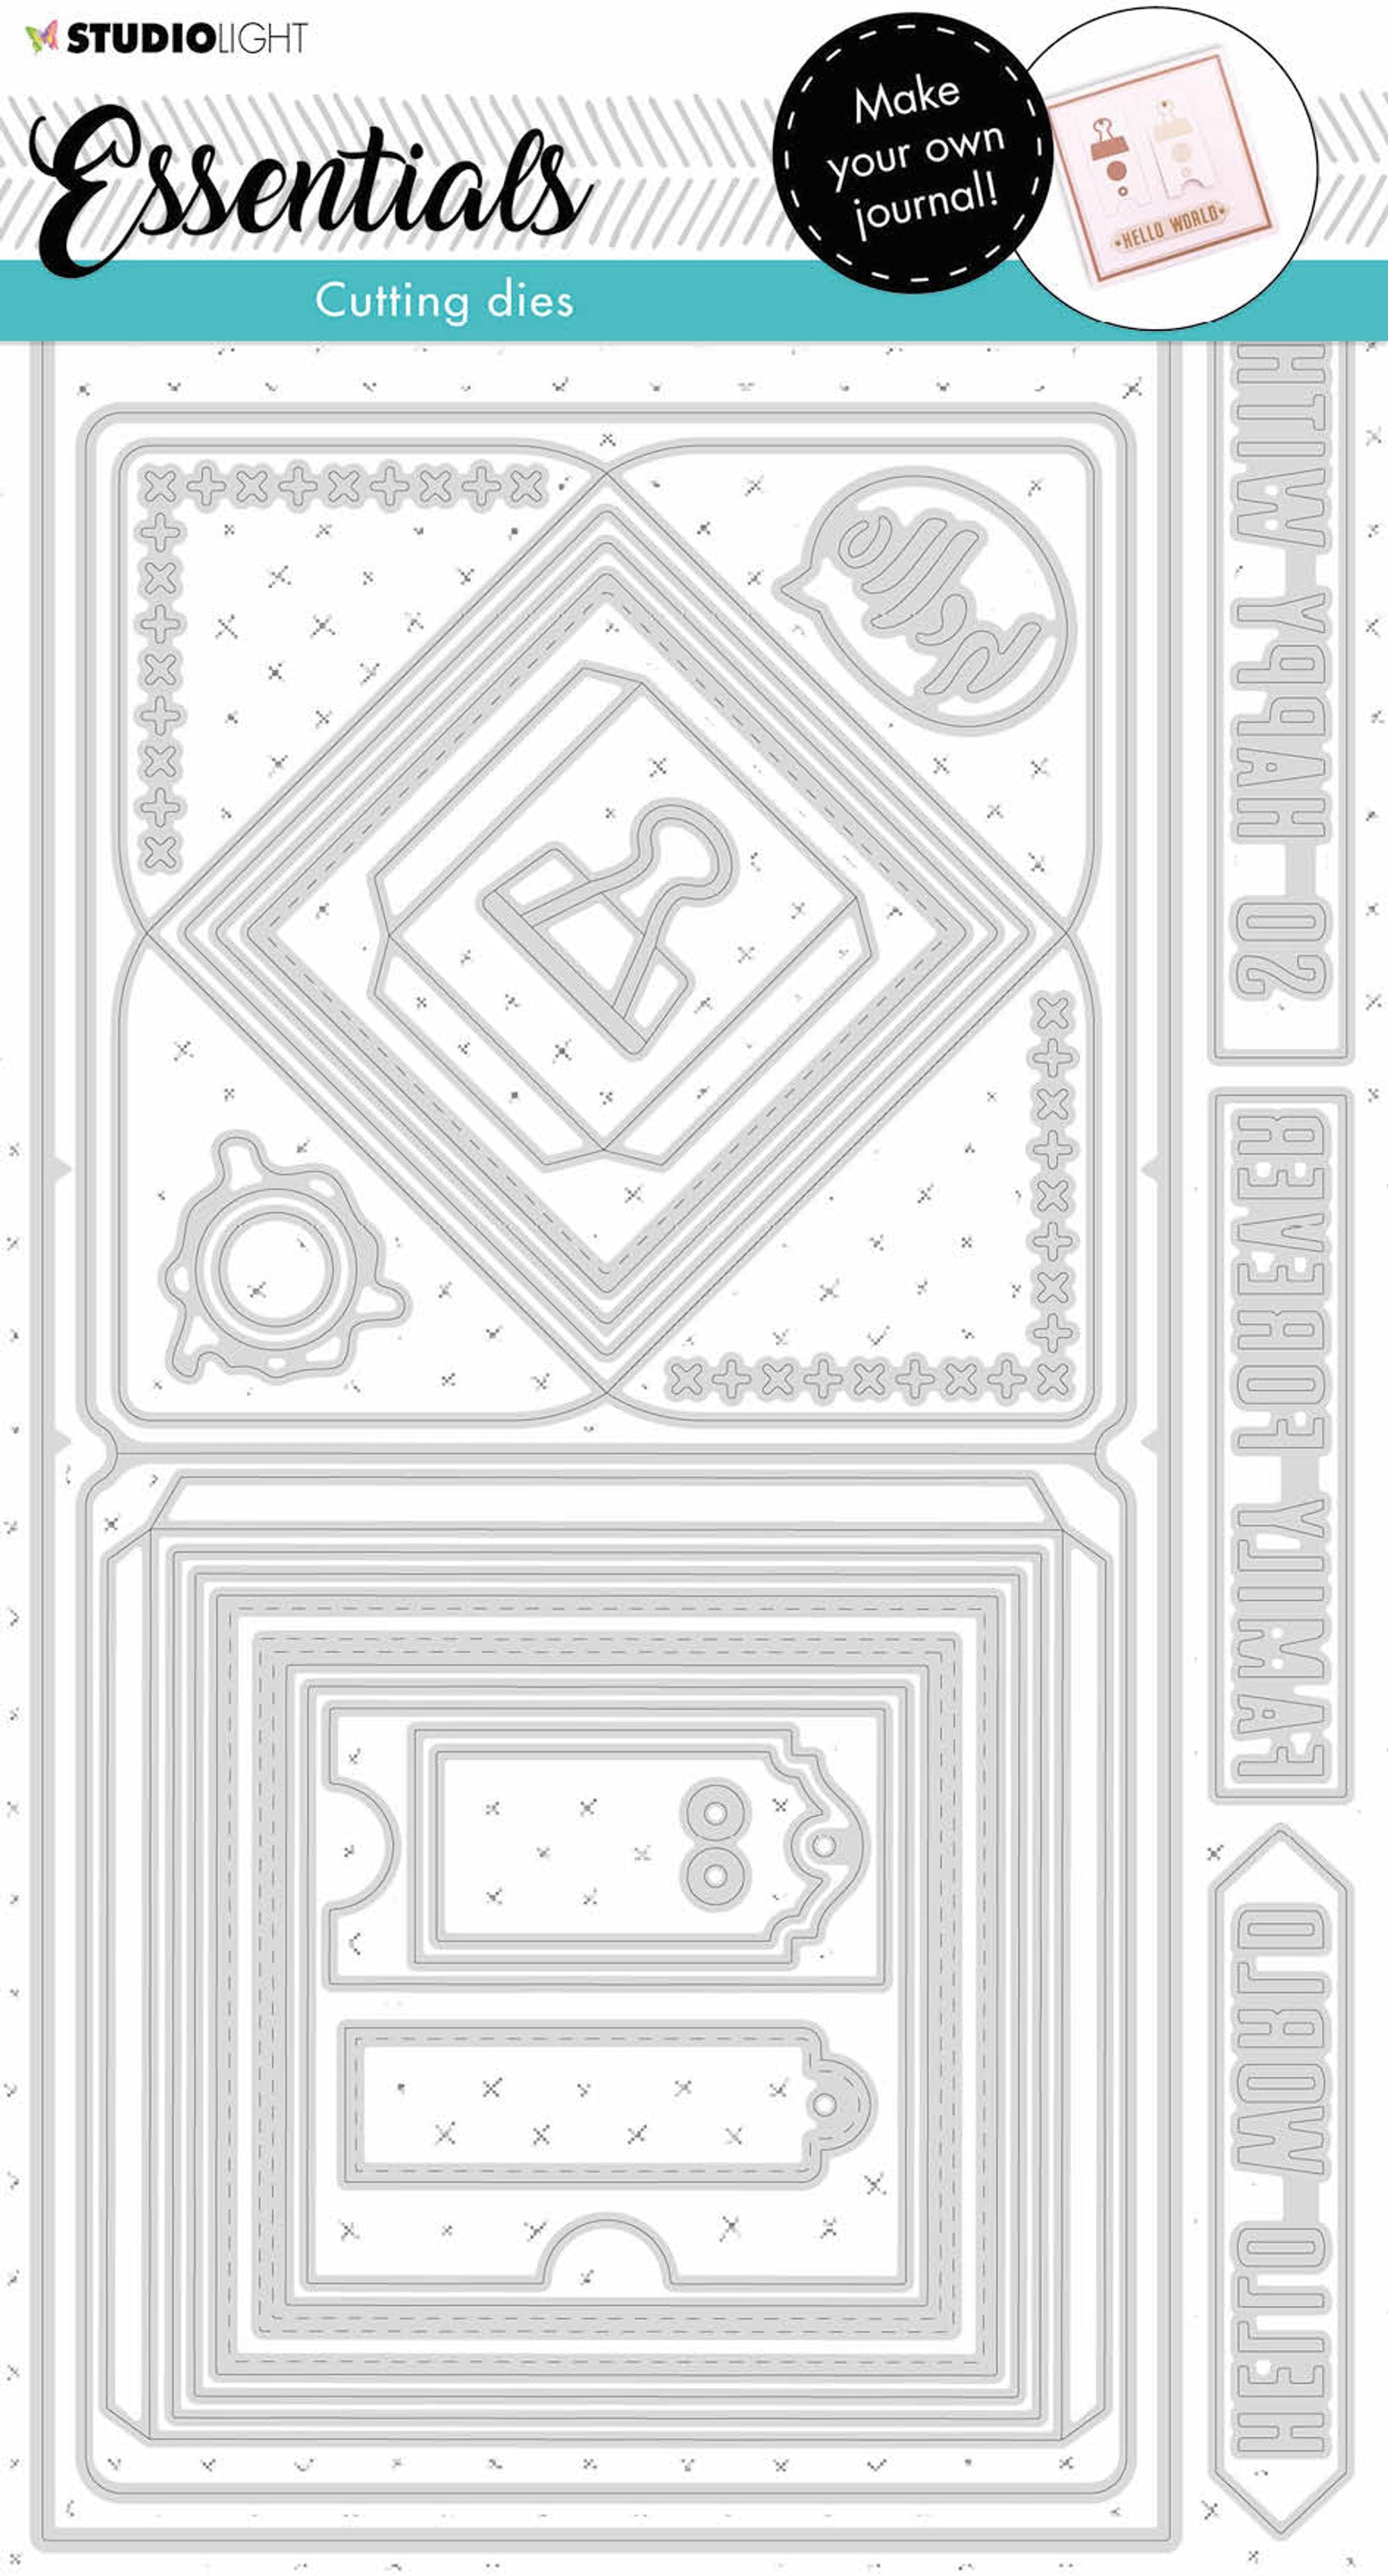 SL Cutting Die Square Journal Essentials 288x153x1mm 1 PC nr.163